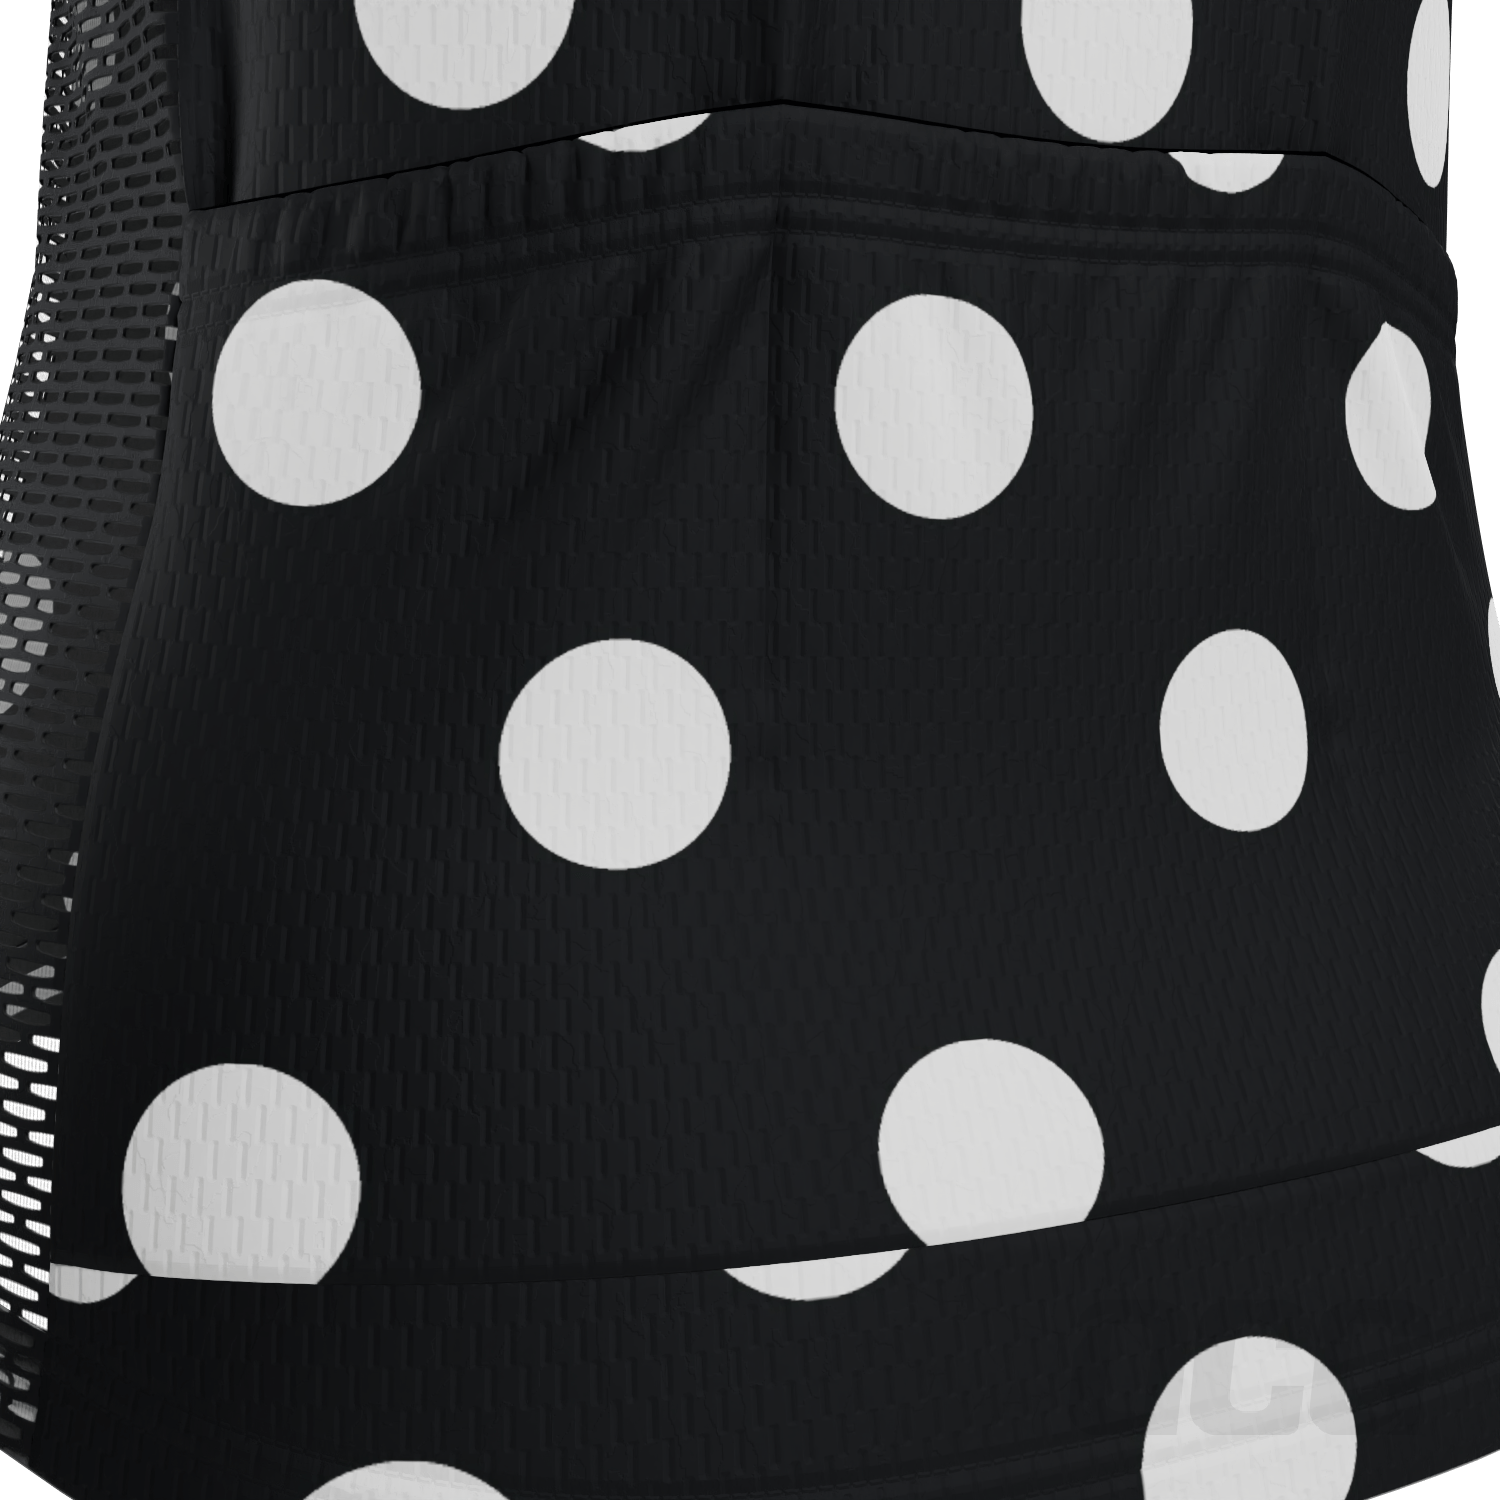 Women's Big Polka Dots Long Sleeve Cycling Jersey